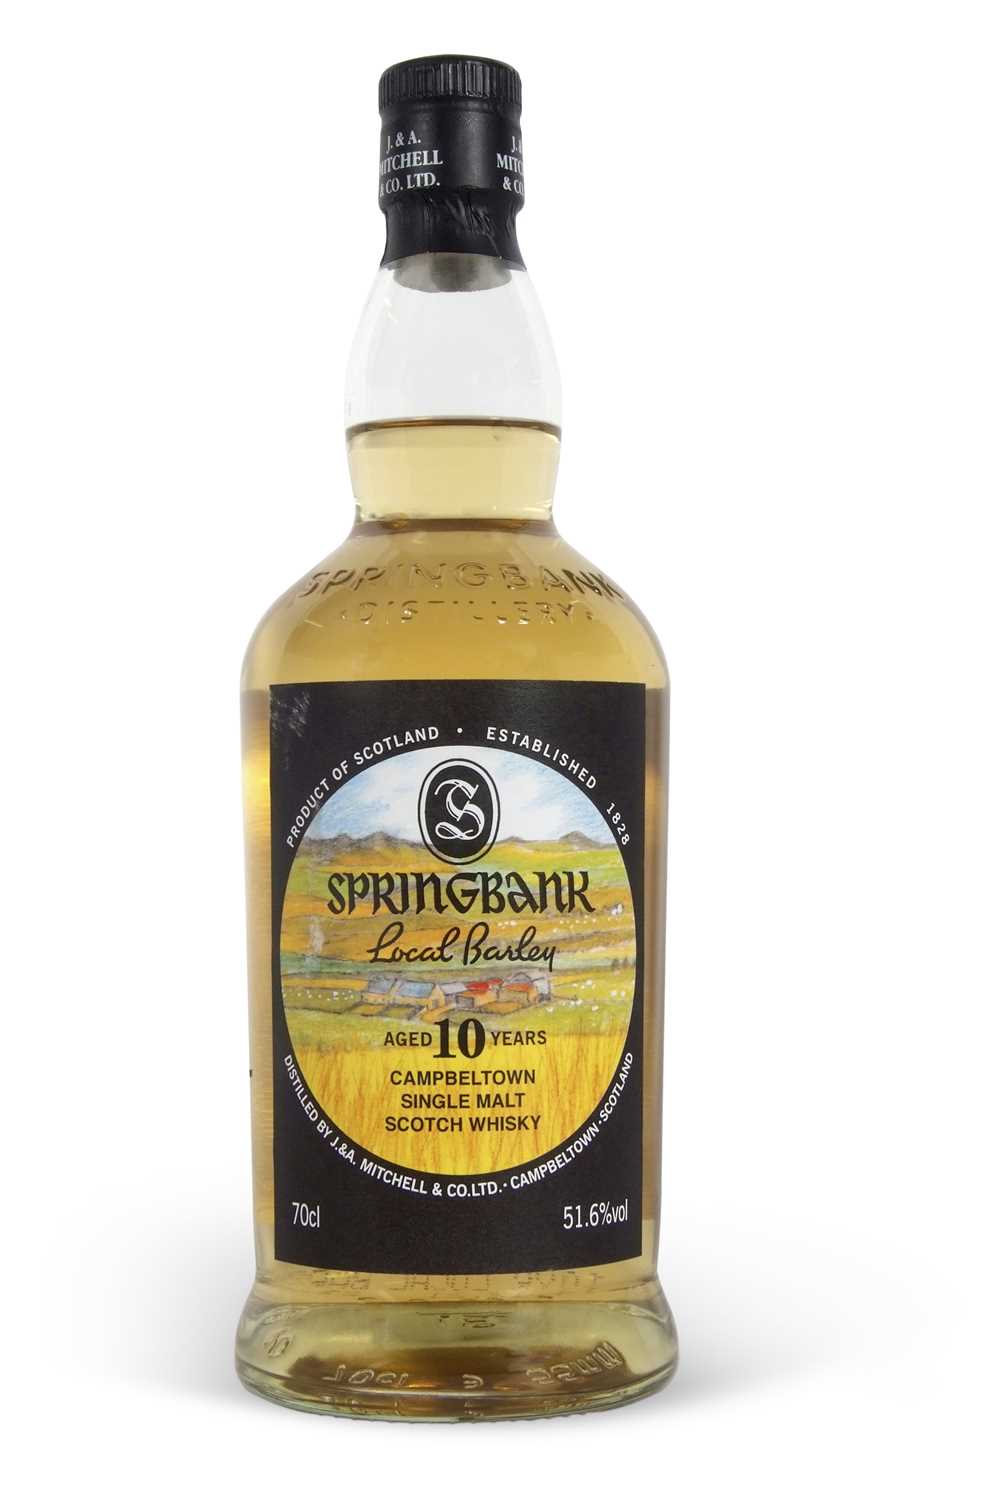 Springbank 2011 10YR Old Single malt Whisky - Image 2 of 2